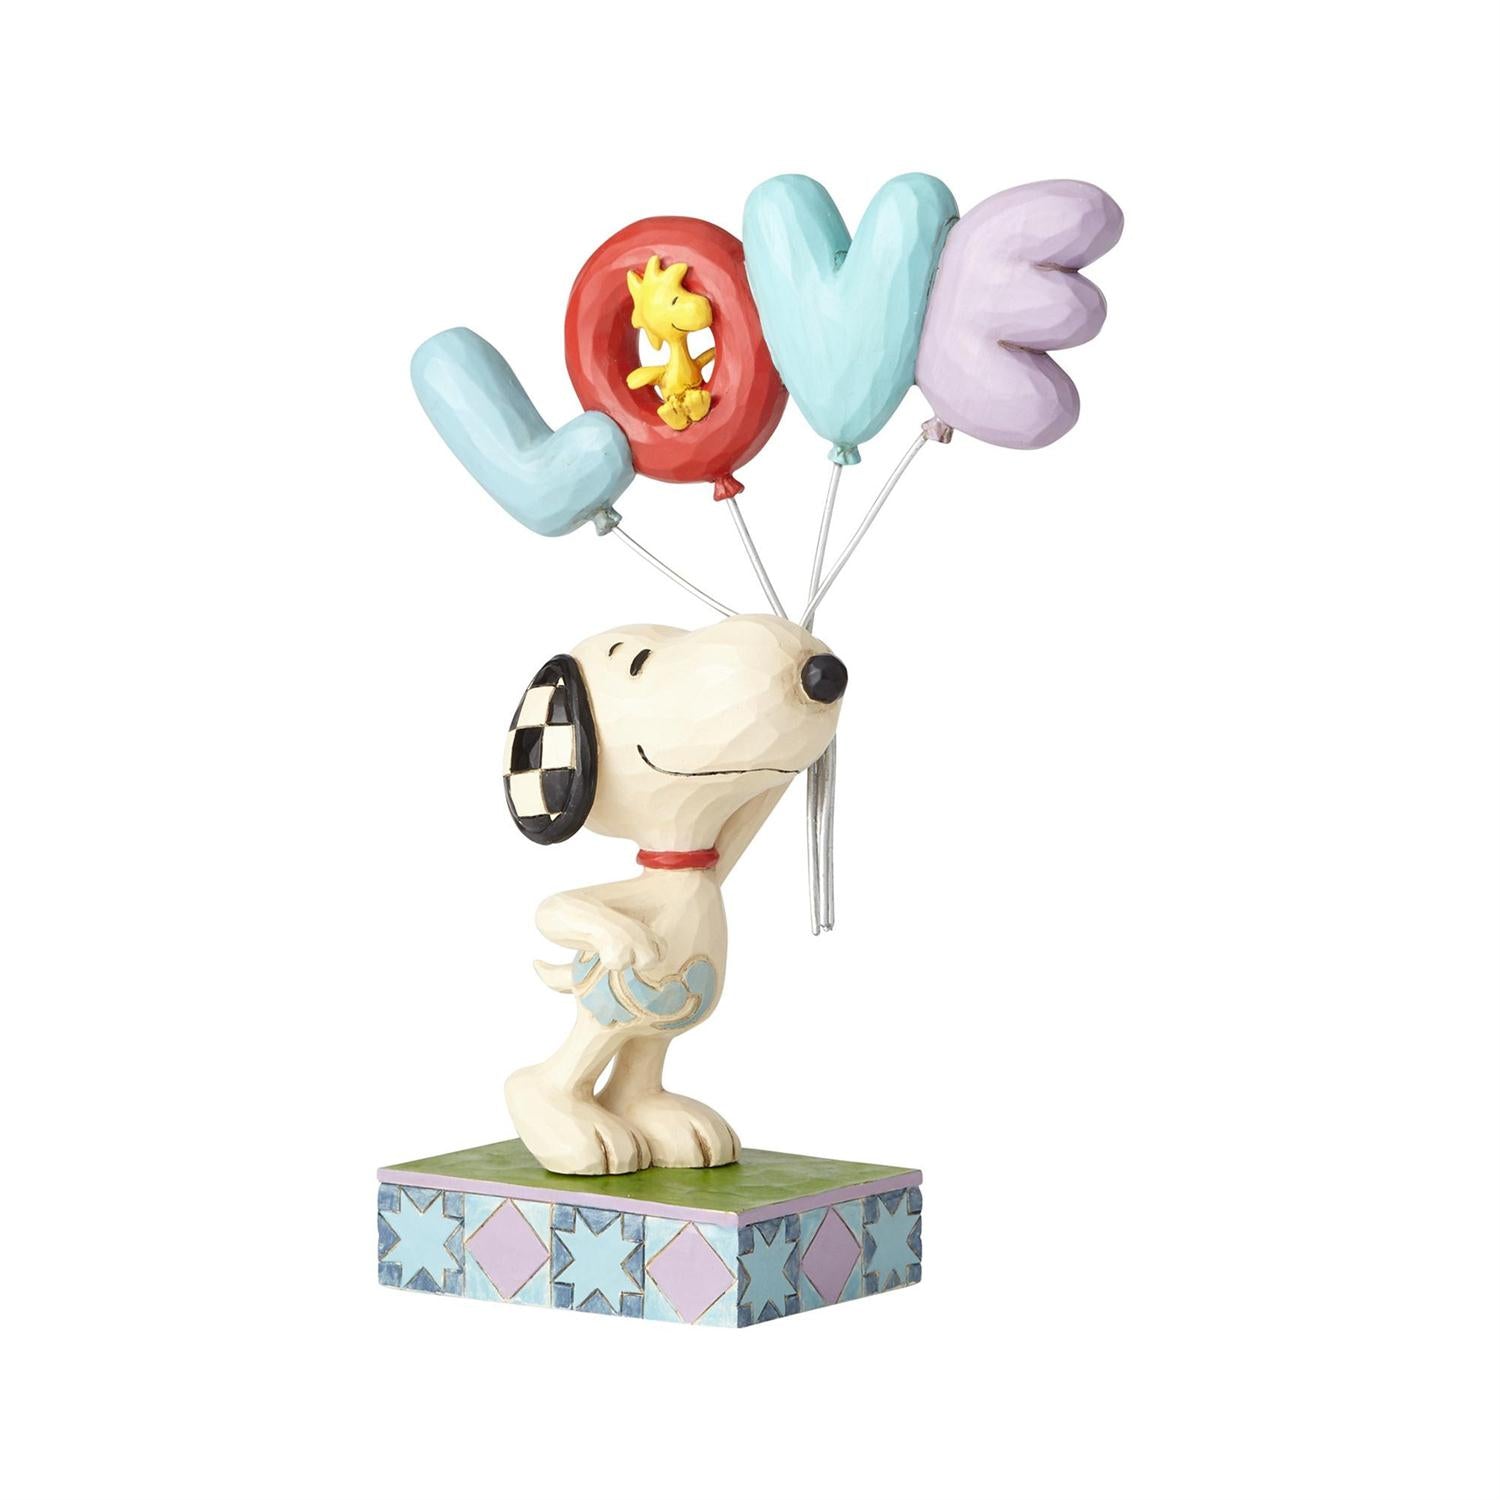 Enesco Jim Shore Peanuts Snoopy with Love Balloon Figurine, 7.5 Inch, Multicolor